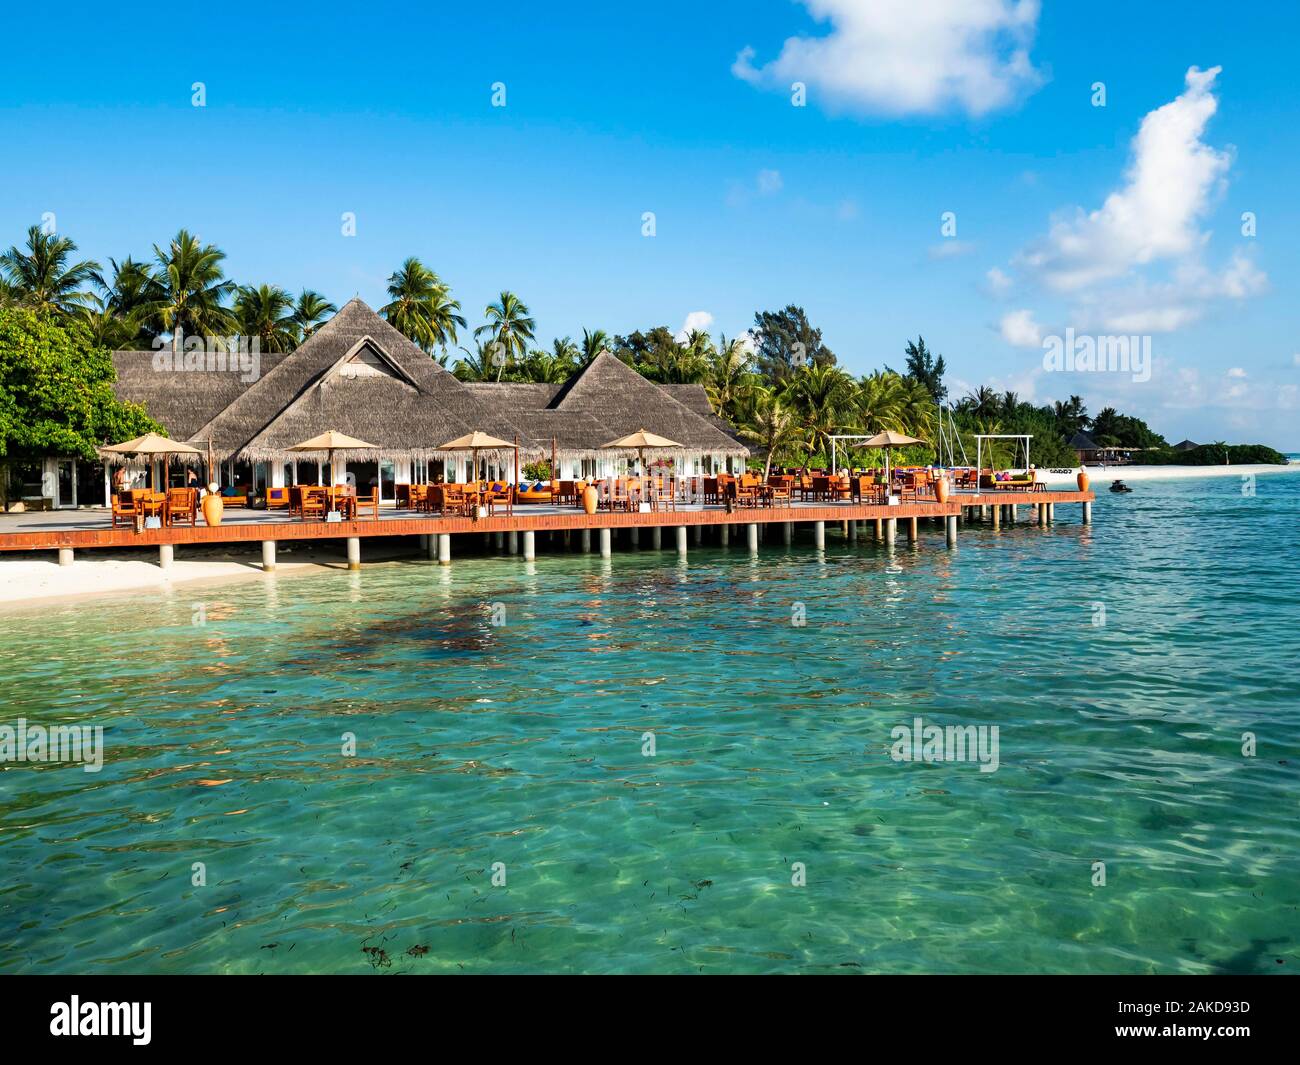 Complejo Turístico de Bungalows, entre palmeras, Maldivas Island, South Male Atoll, Maldivas Foto de stock